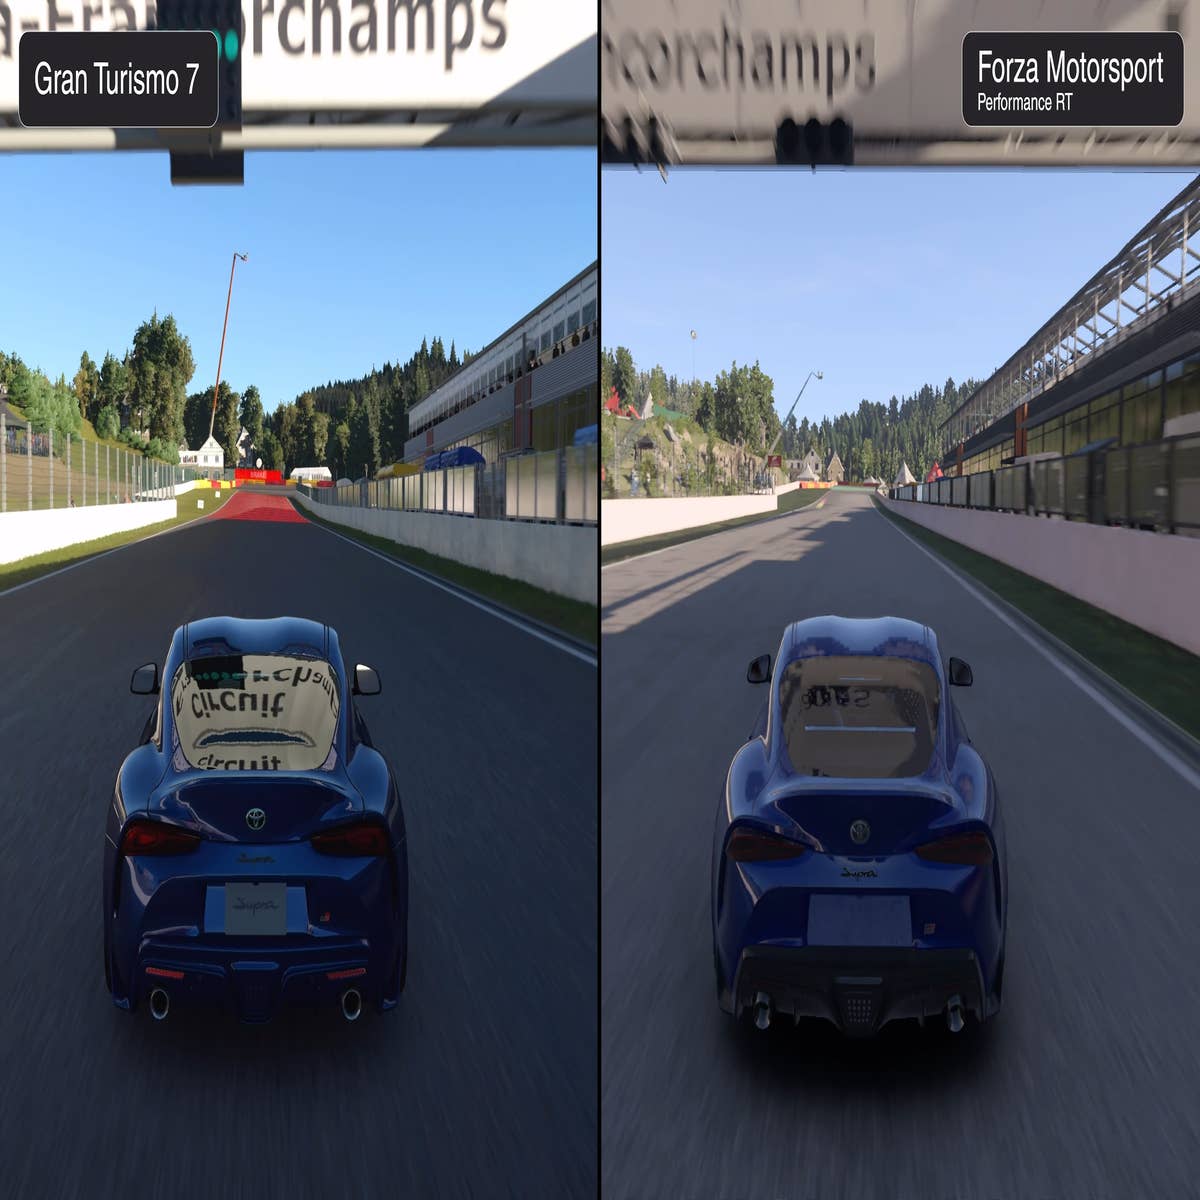 Forza Motorsport vs Gran Turismo 7: the Digital Foundry tech